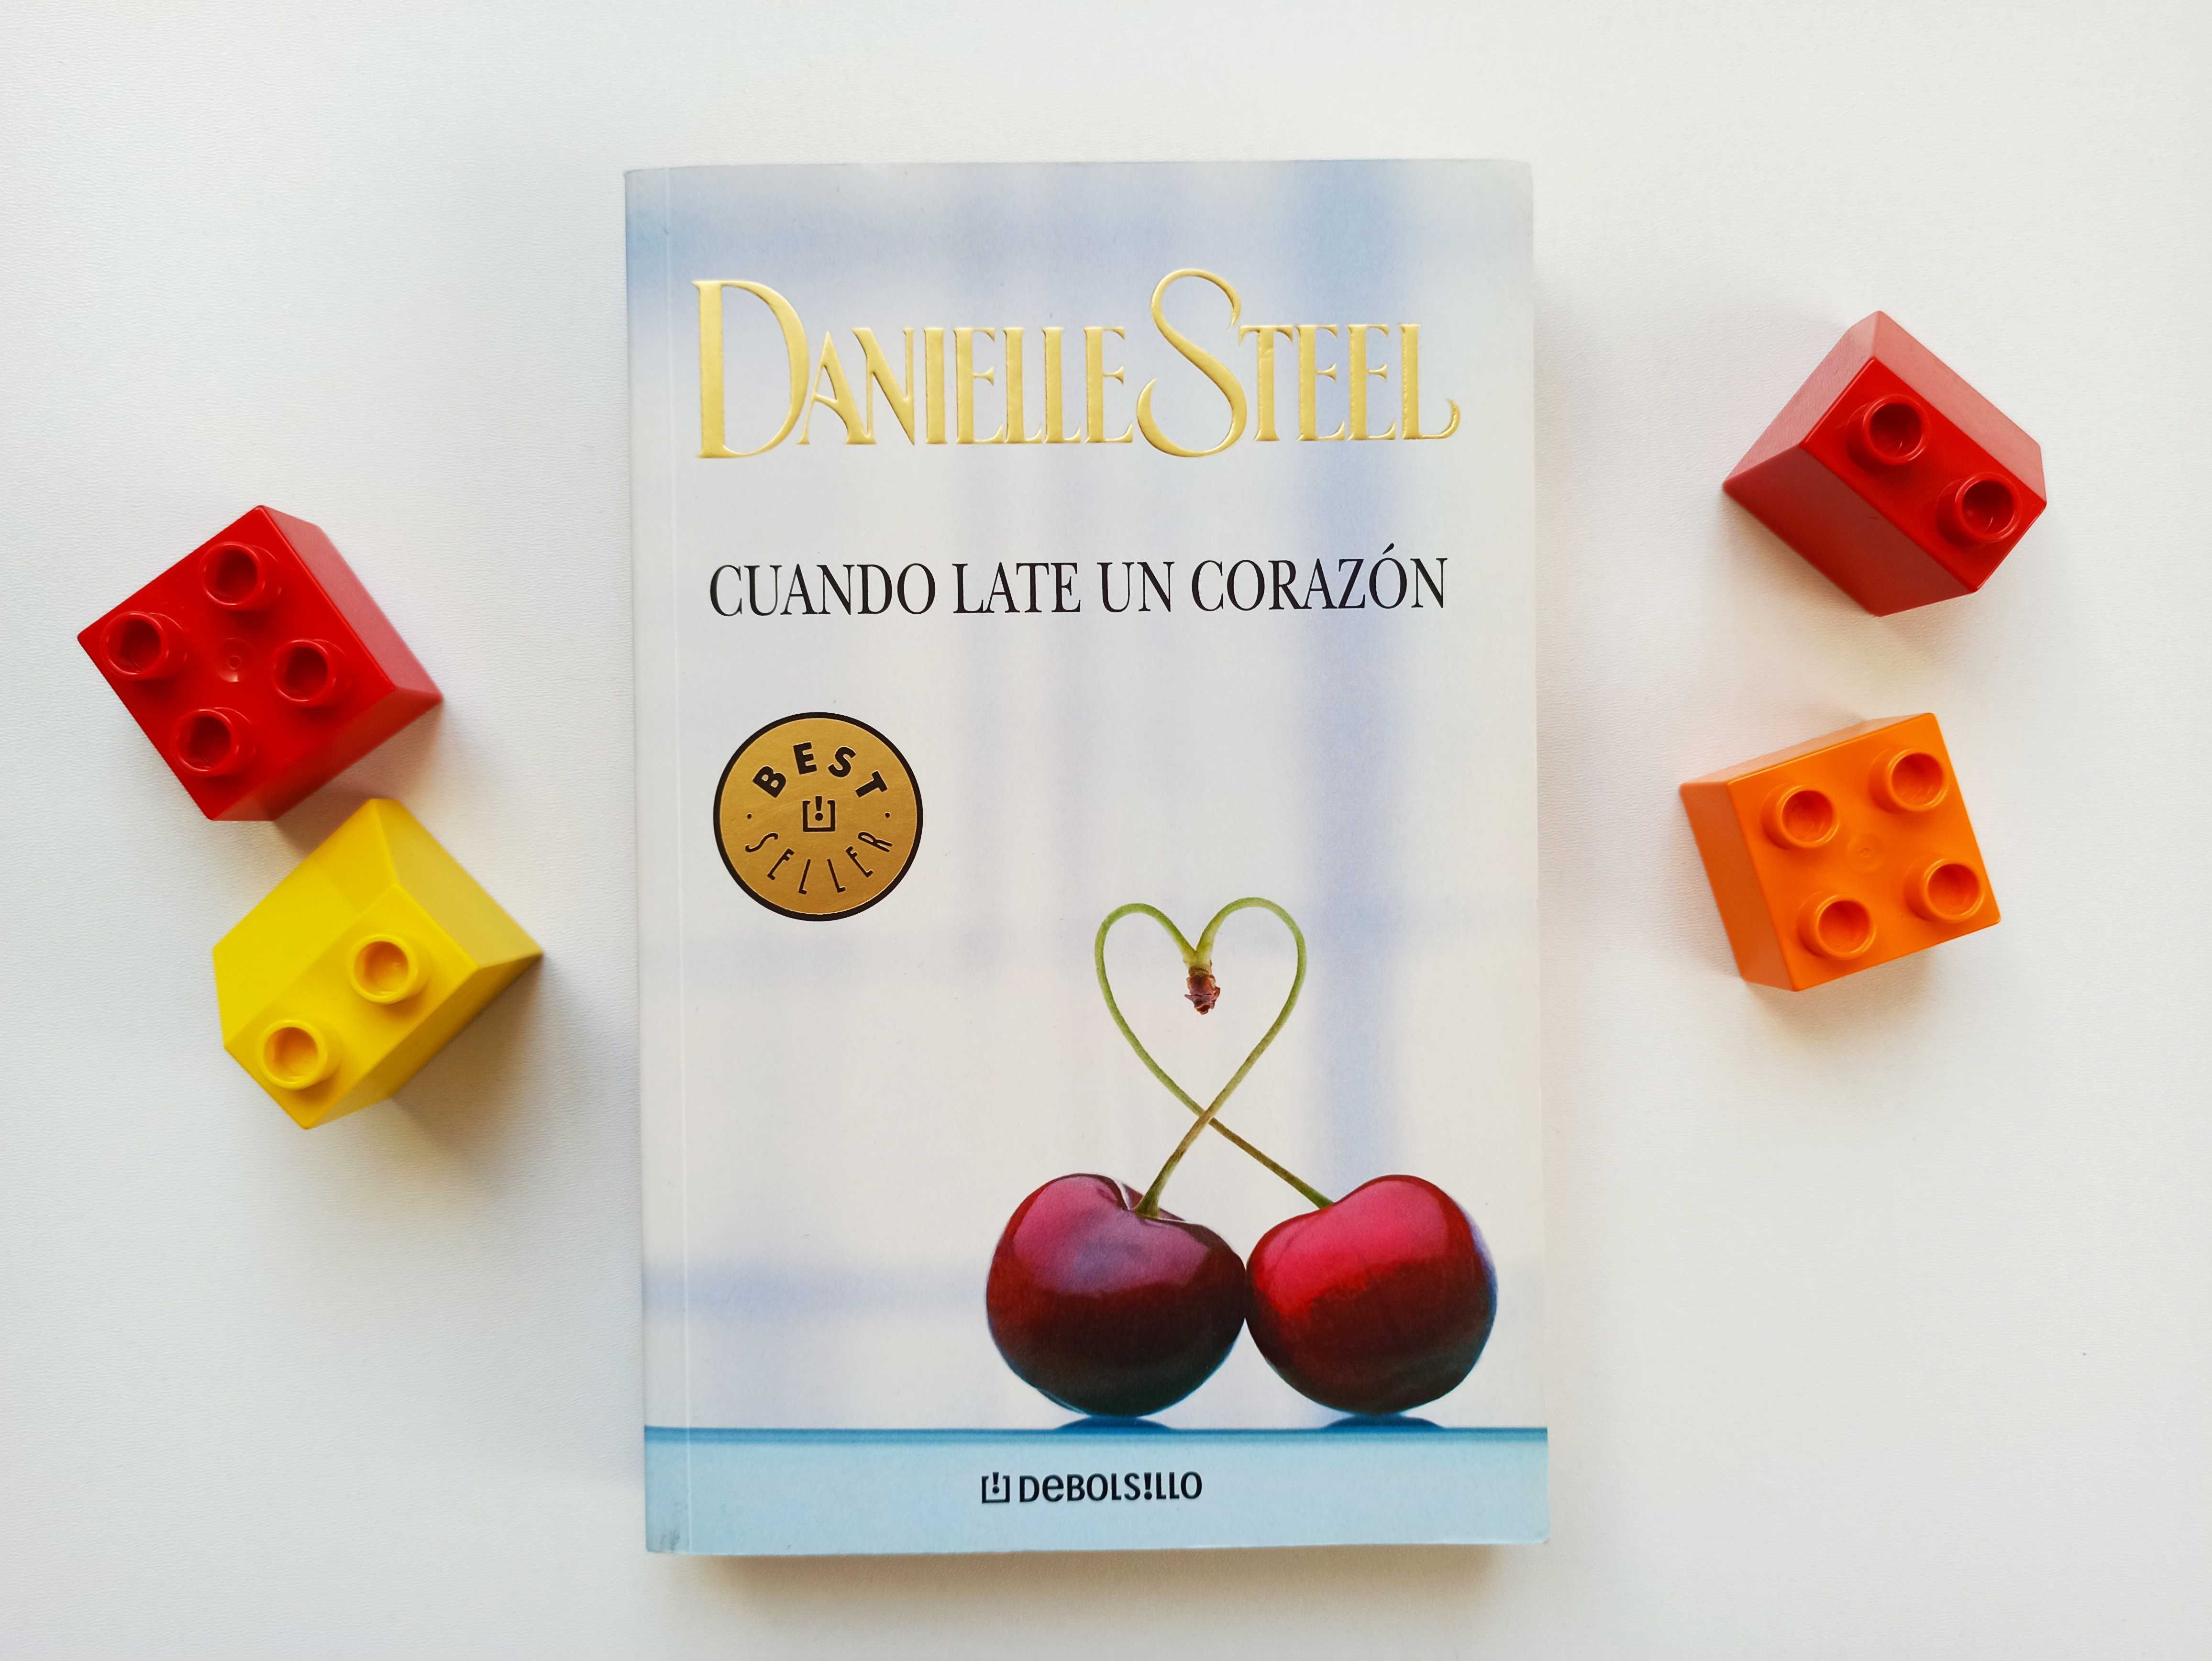 Książka po hiszpańsku Danielle Steel